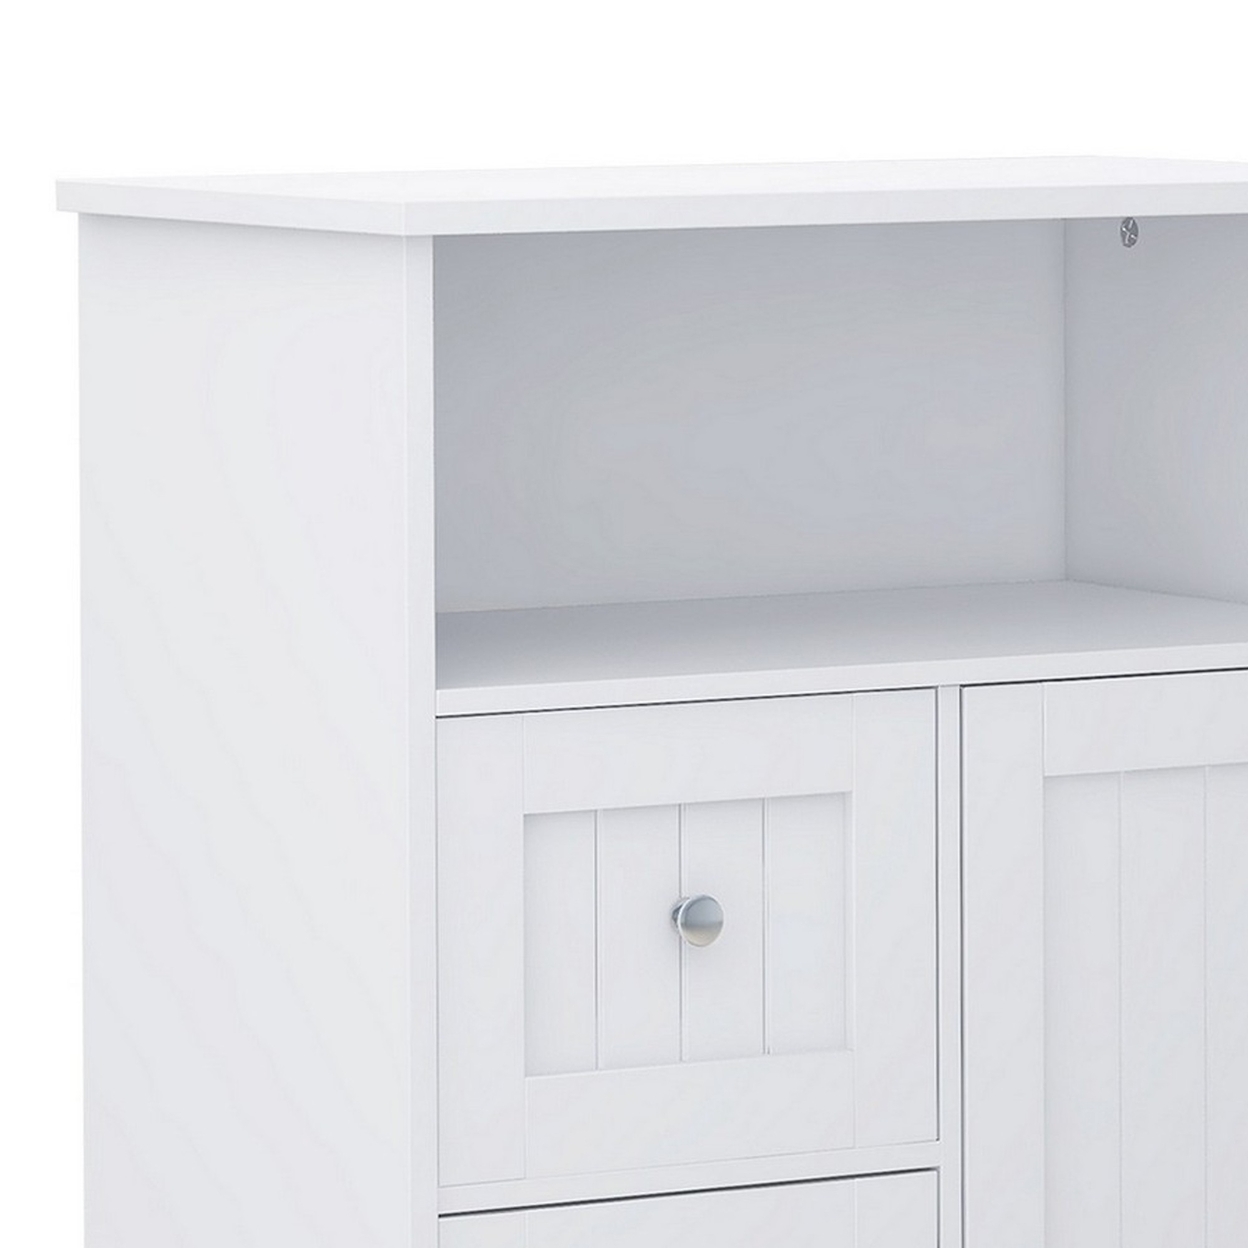 39 Inch Storage Cabinet With 3 Drawers, 1 Open Shelf, Crisp White Finish- Saltoro Sherpi